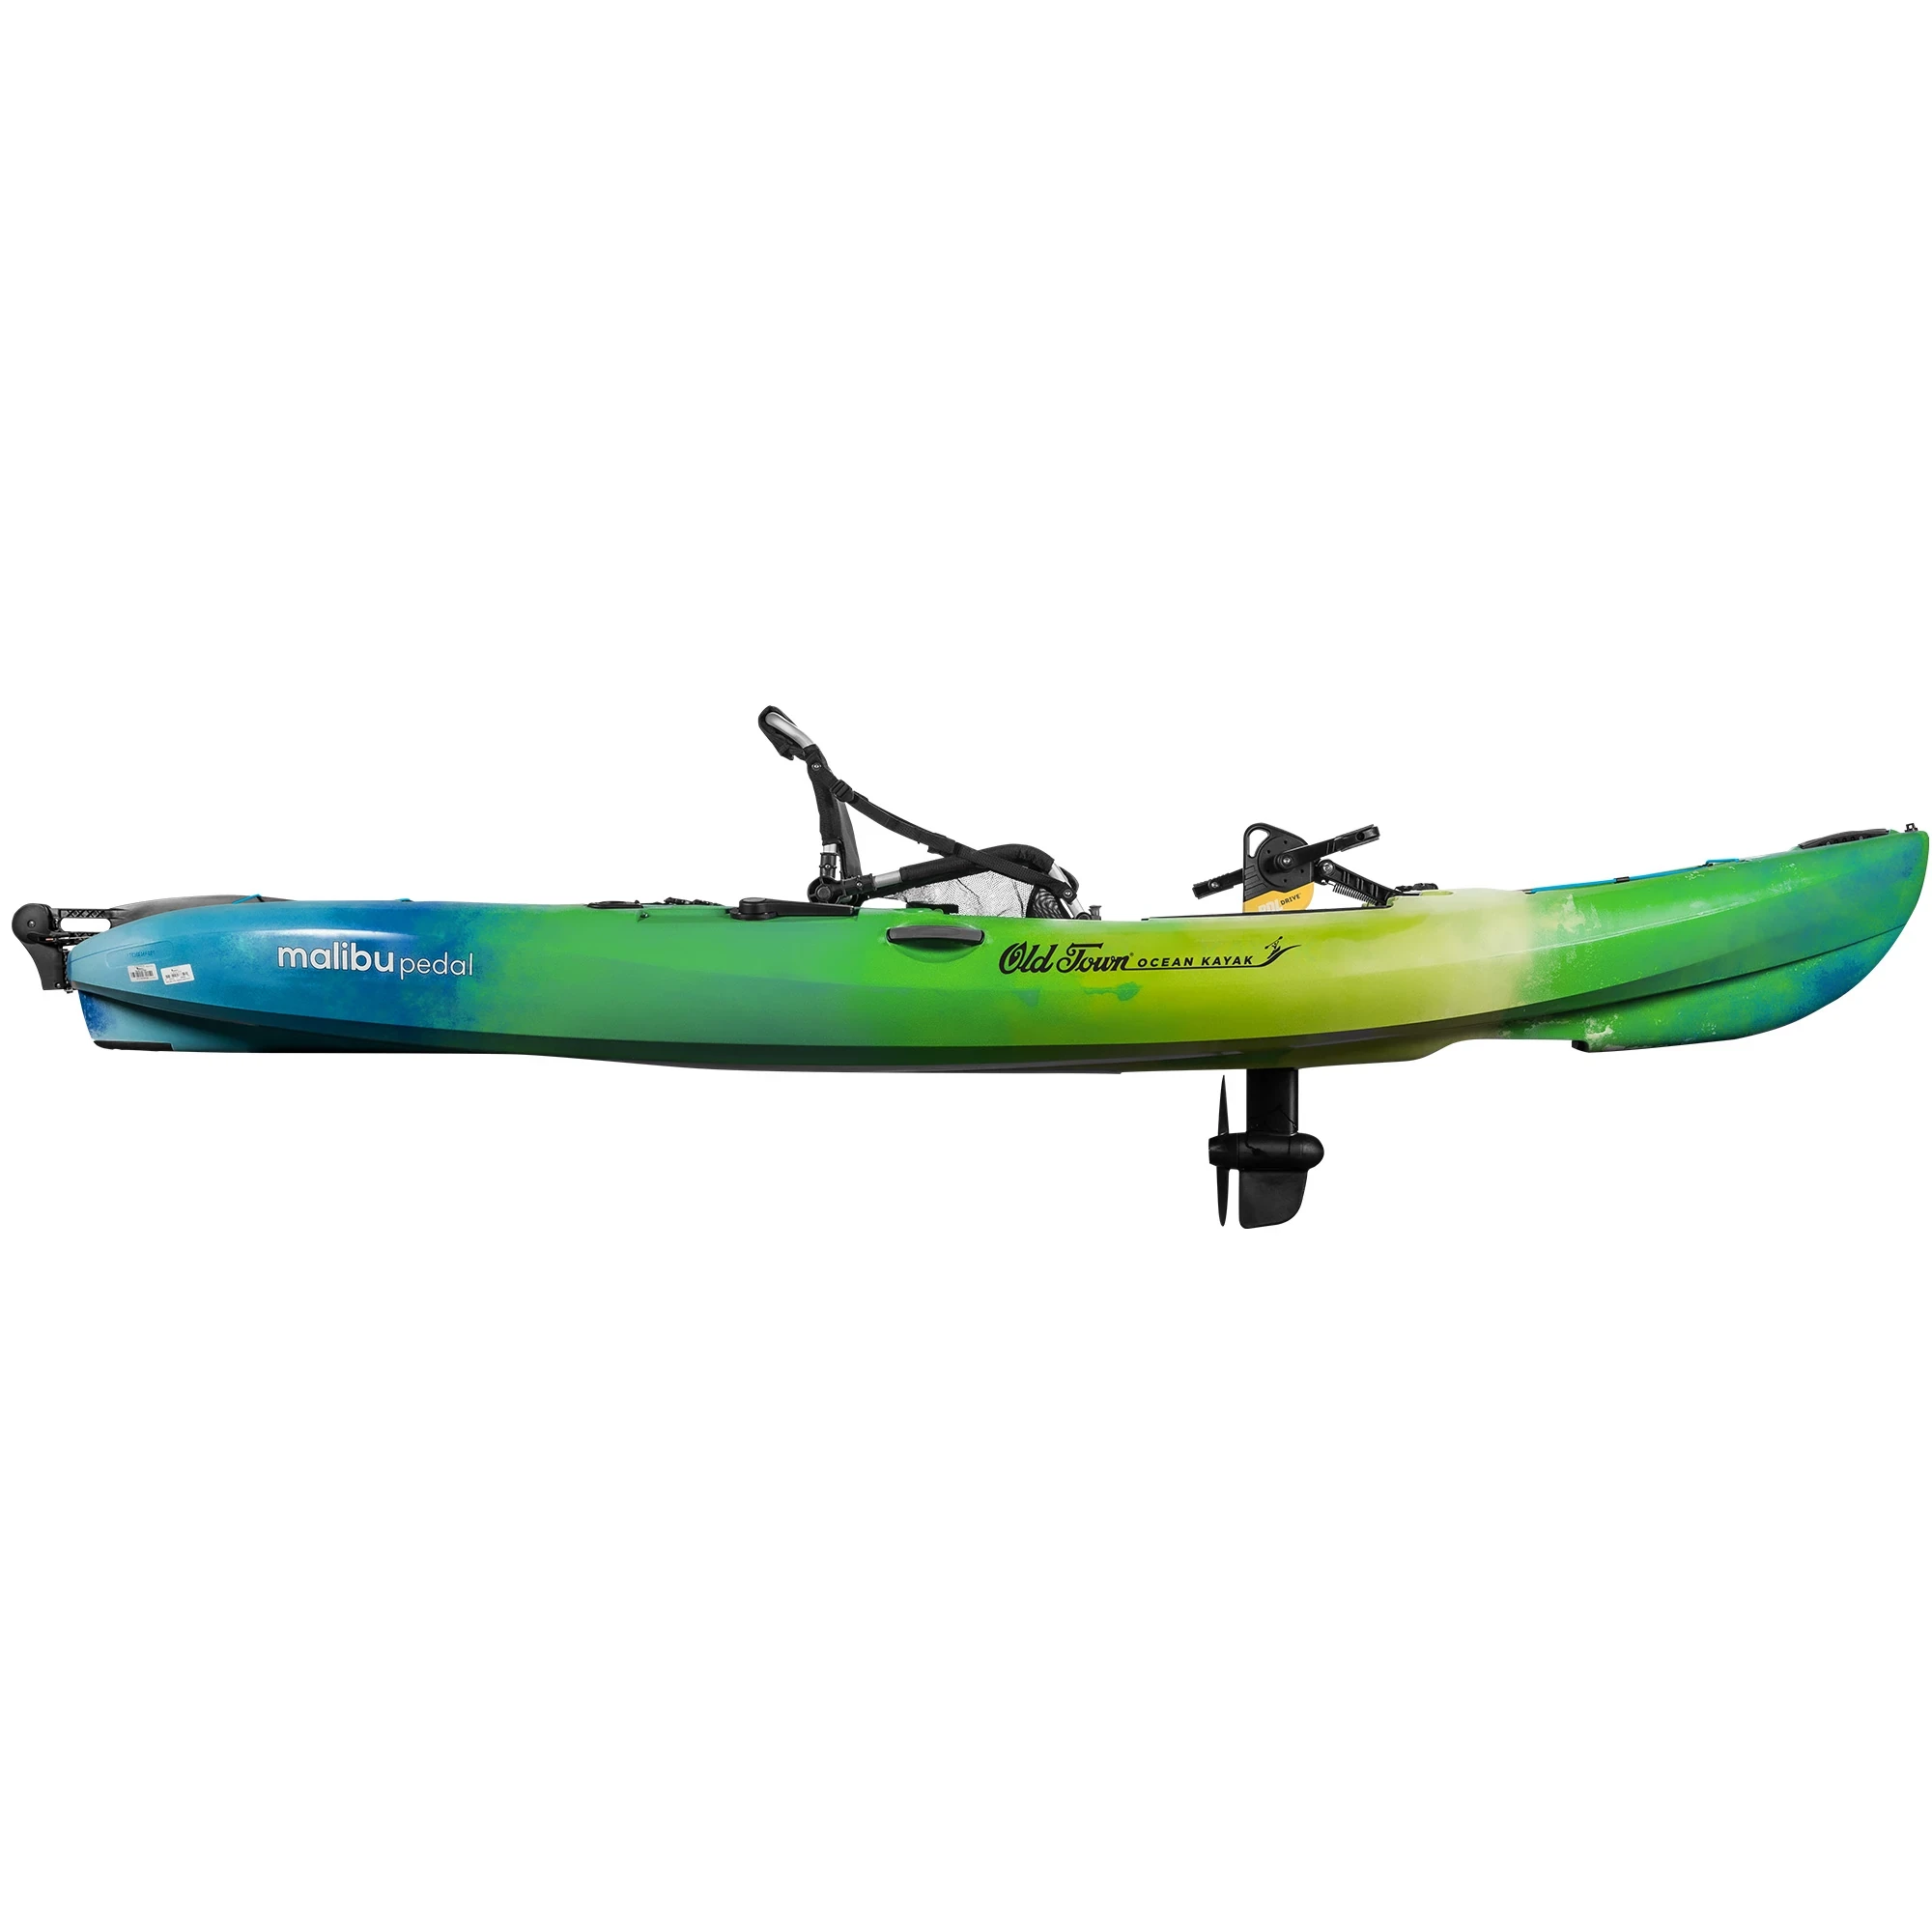 Ocean Kayak Malibu PDL - Ahi - Side View with Prop Down